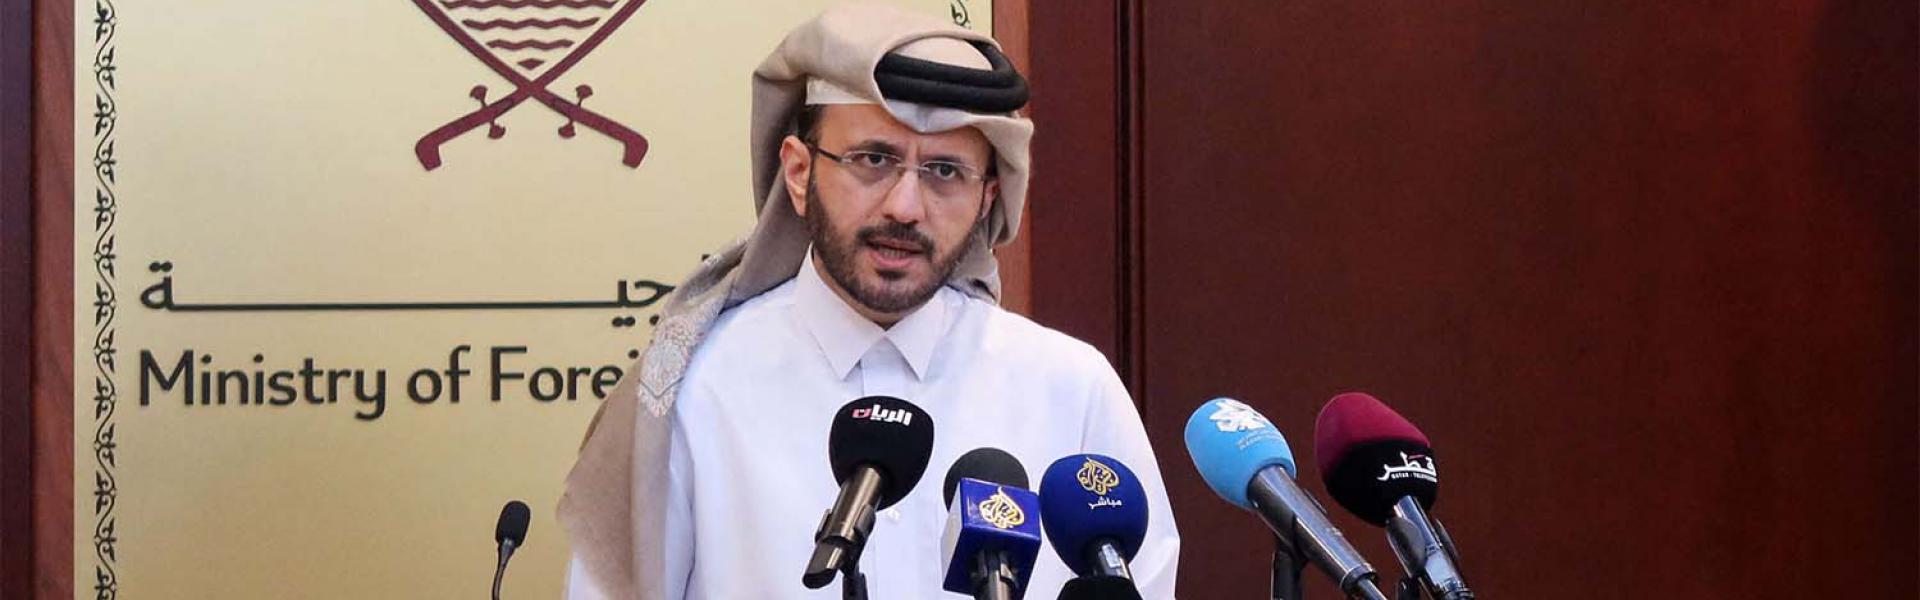 Qatar's foreign ministry spokesman Majed Al-Ansari